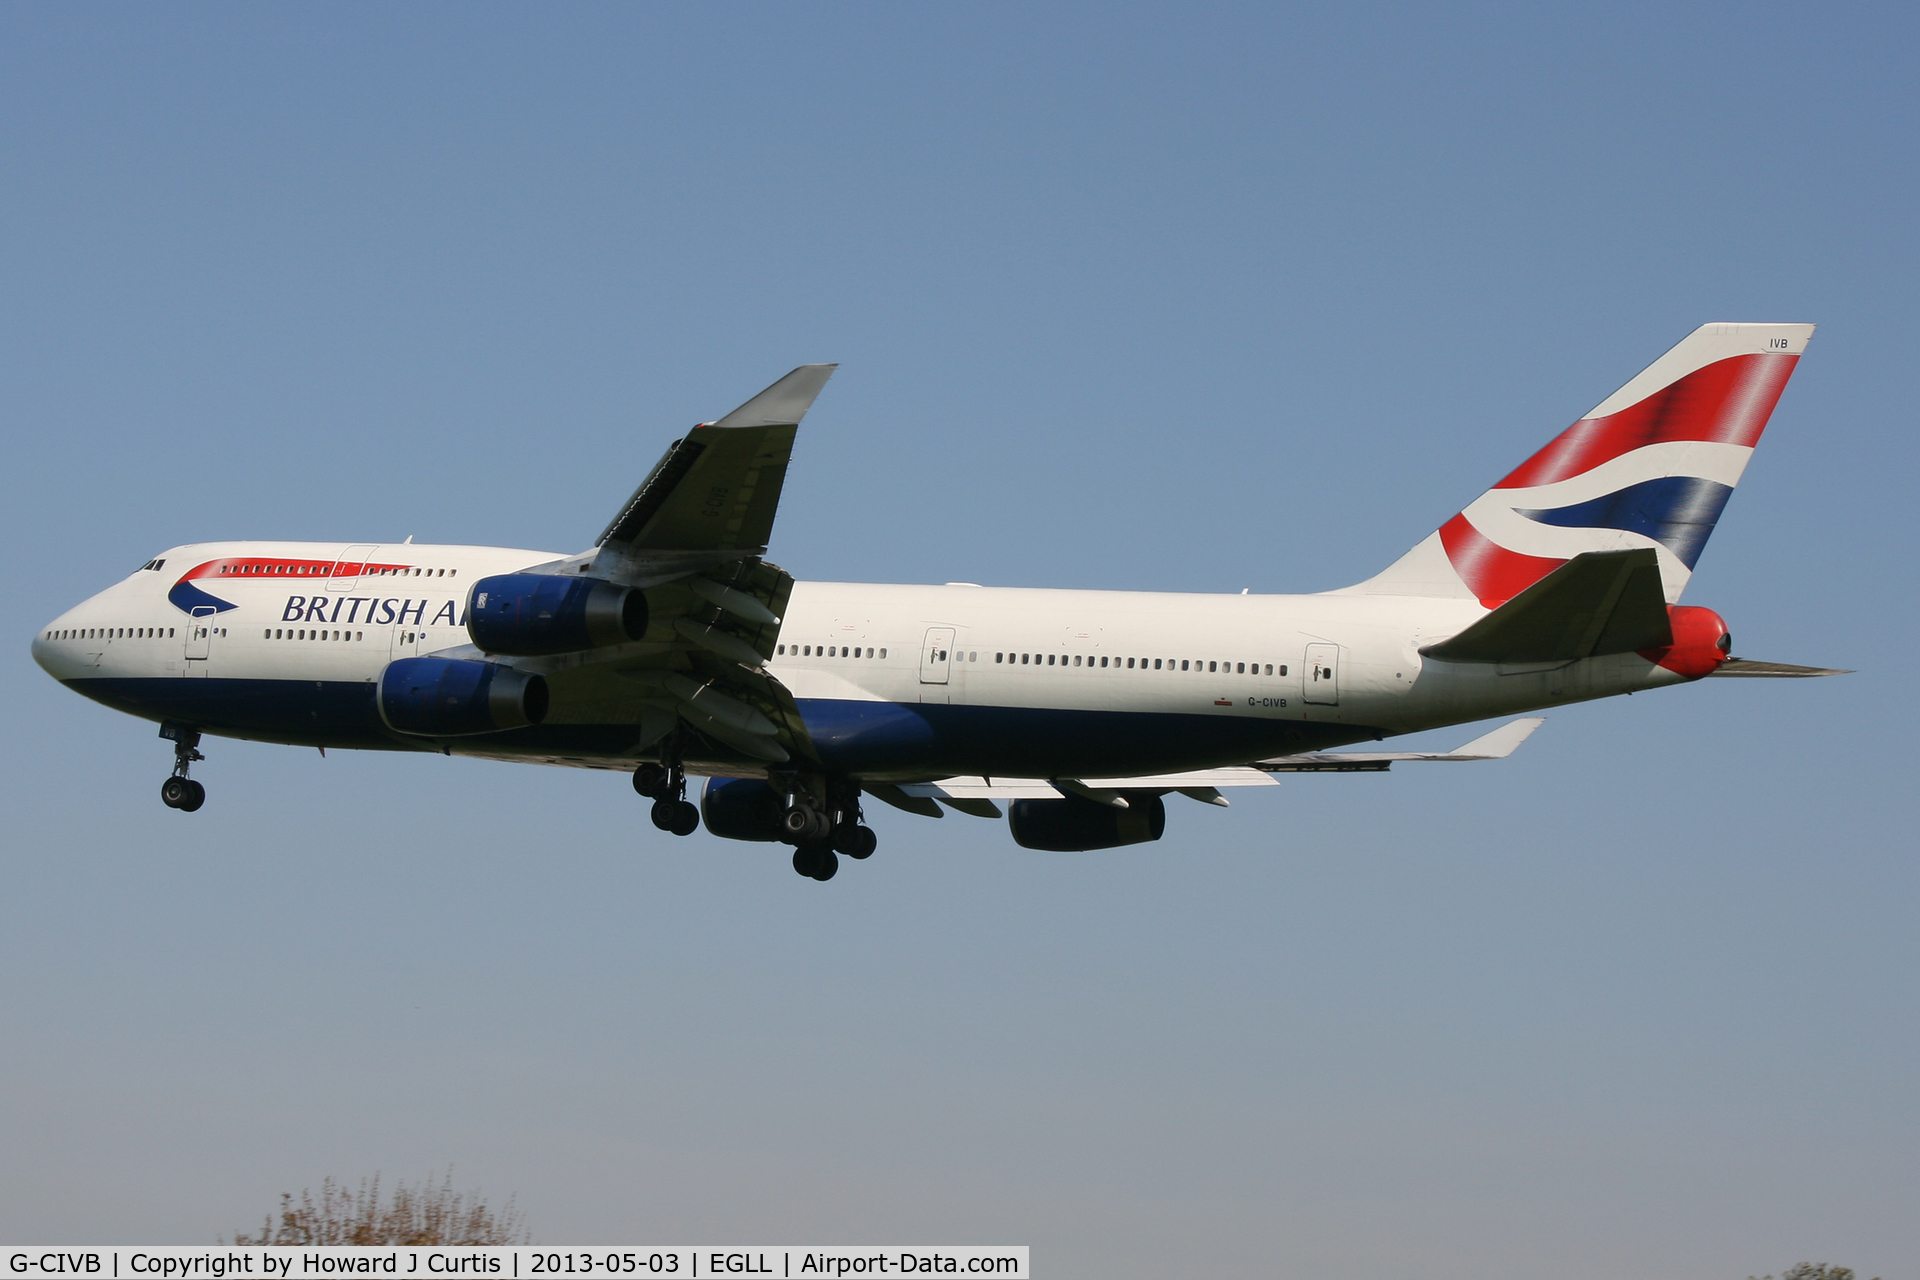 G-CIVB, 1994 Boeing 747-436 C/N 25811, British Airways, on approach to runway 27L.